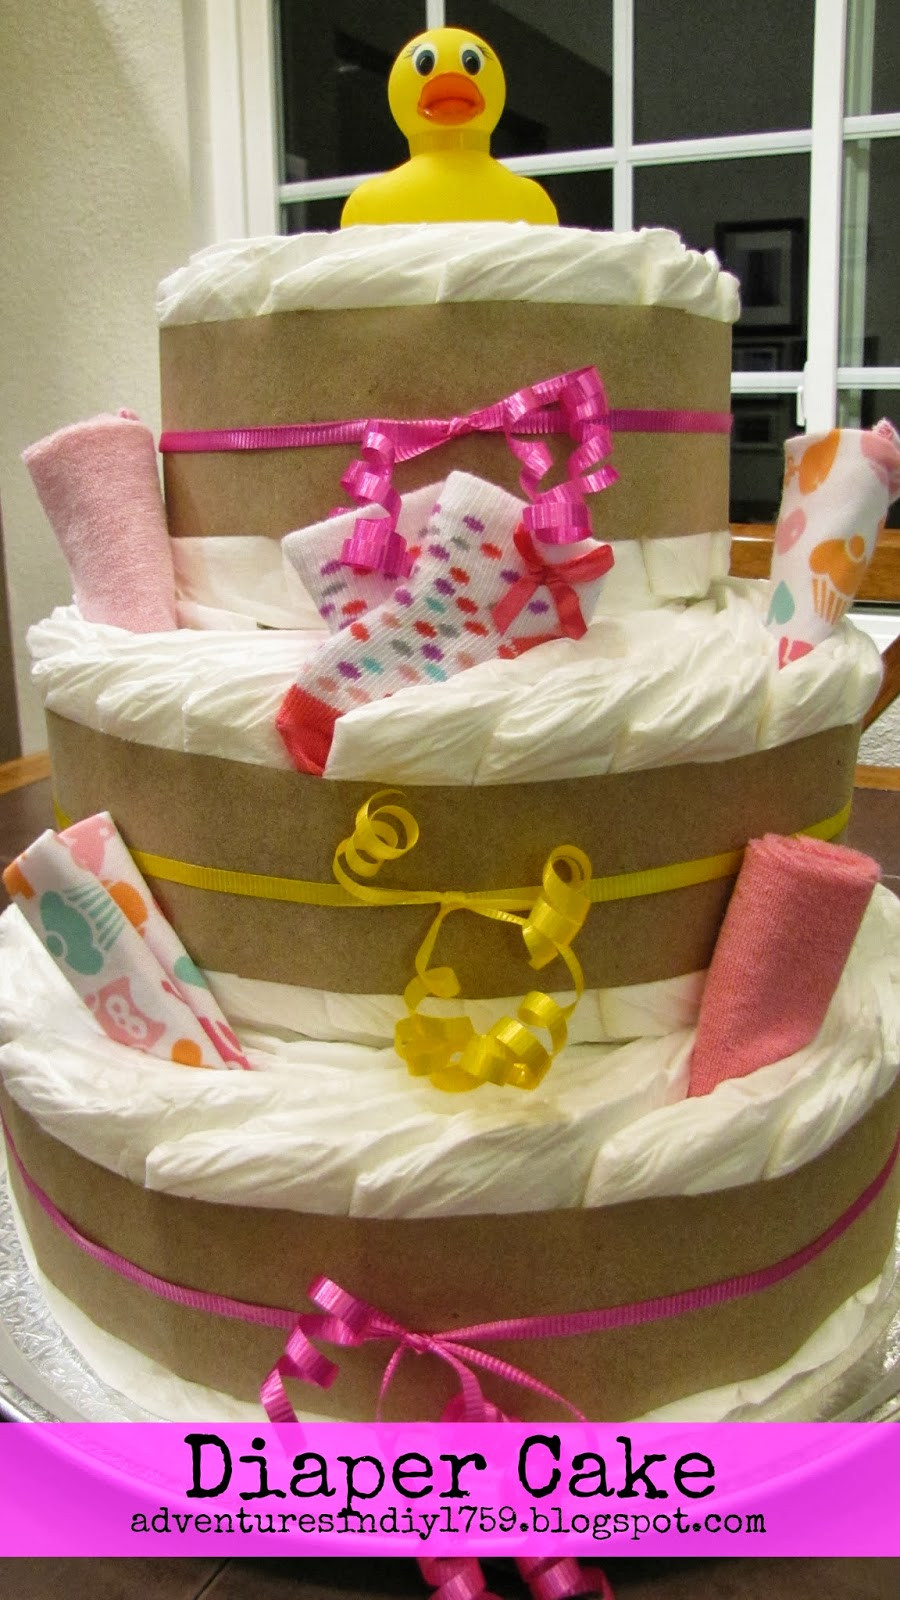 DIY Baby Shower Cakes
 Adventures in DIY Baby Shower Diaper Cake